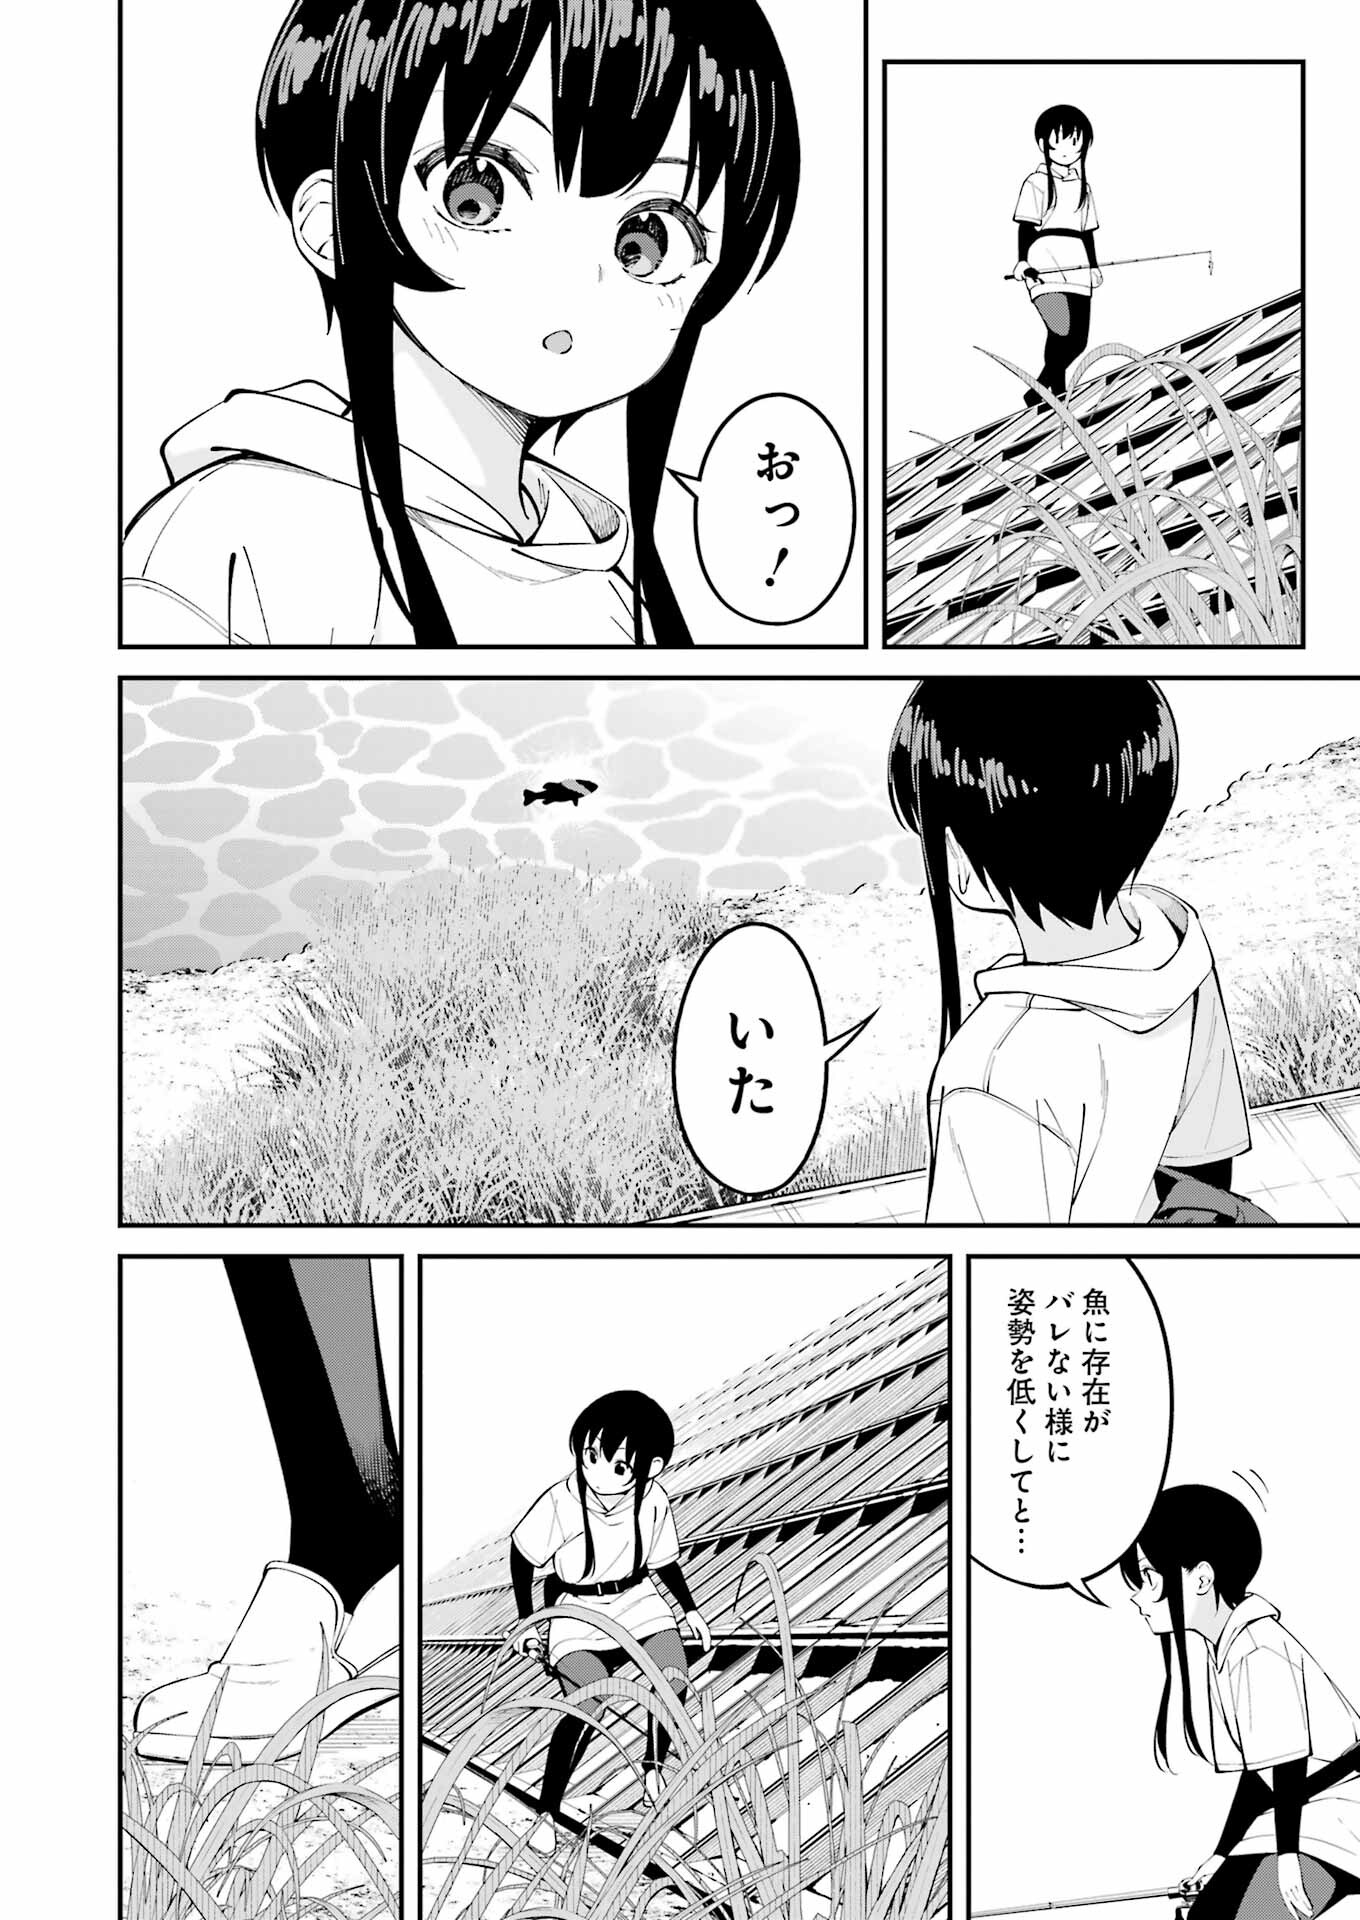 Tsuri Komachi - Chapter 54 - Page 4